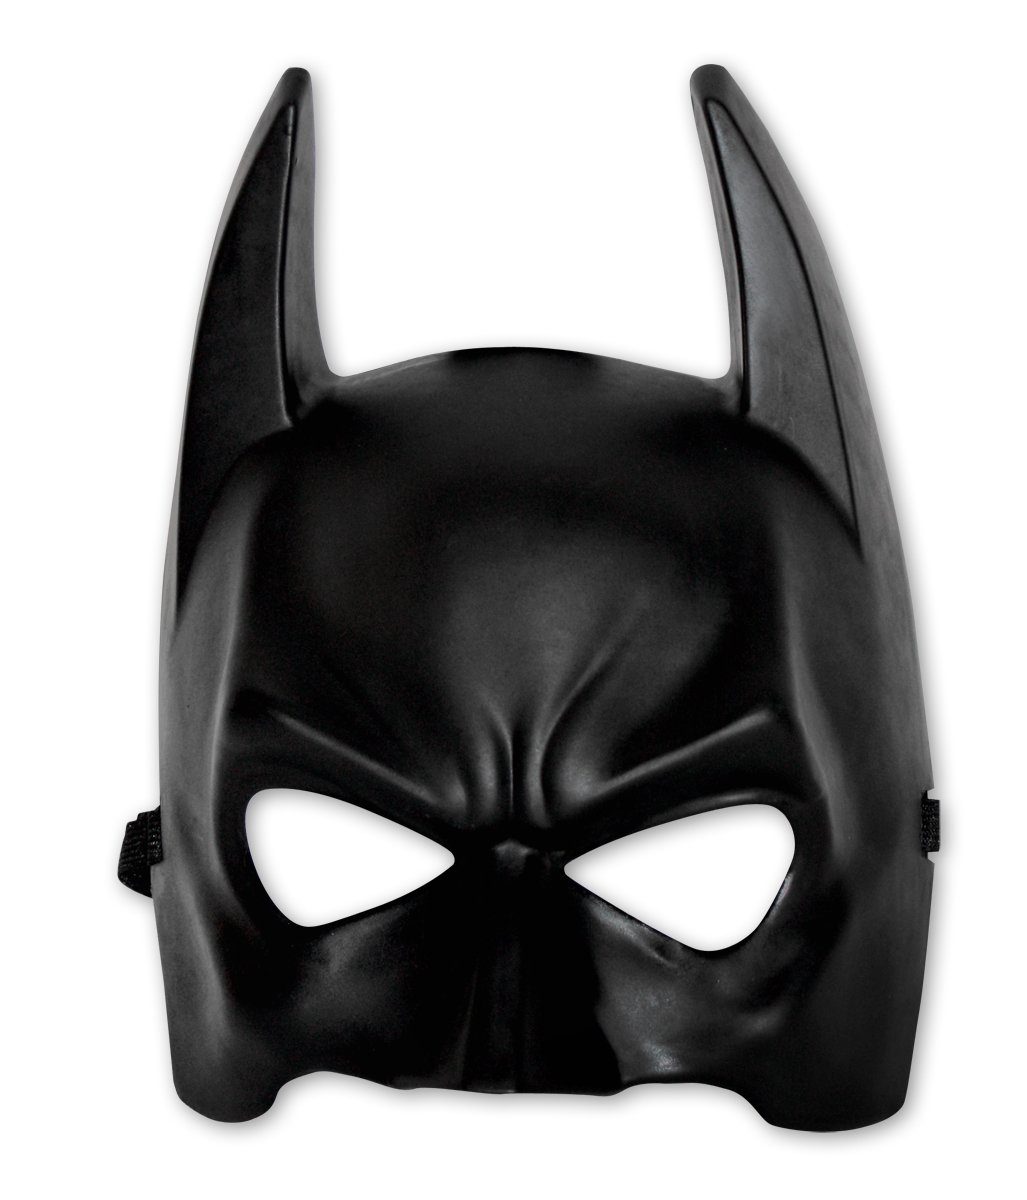 rubiesuk Kostüm Batman Maske für Erwachsene